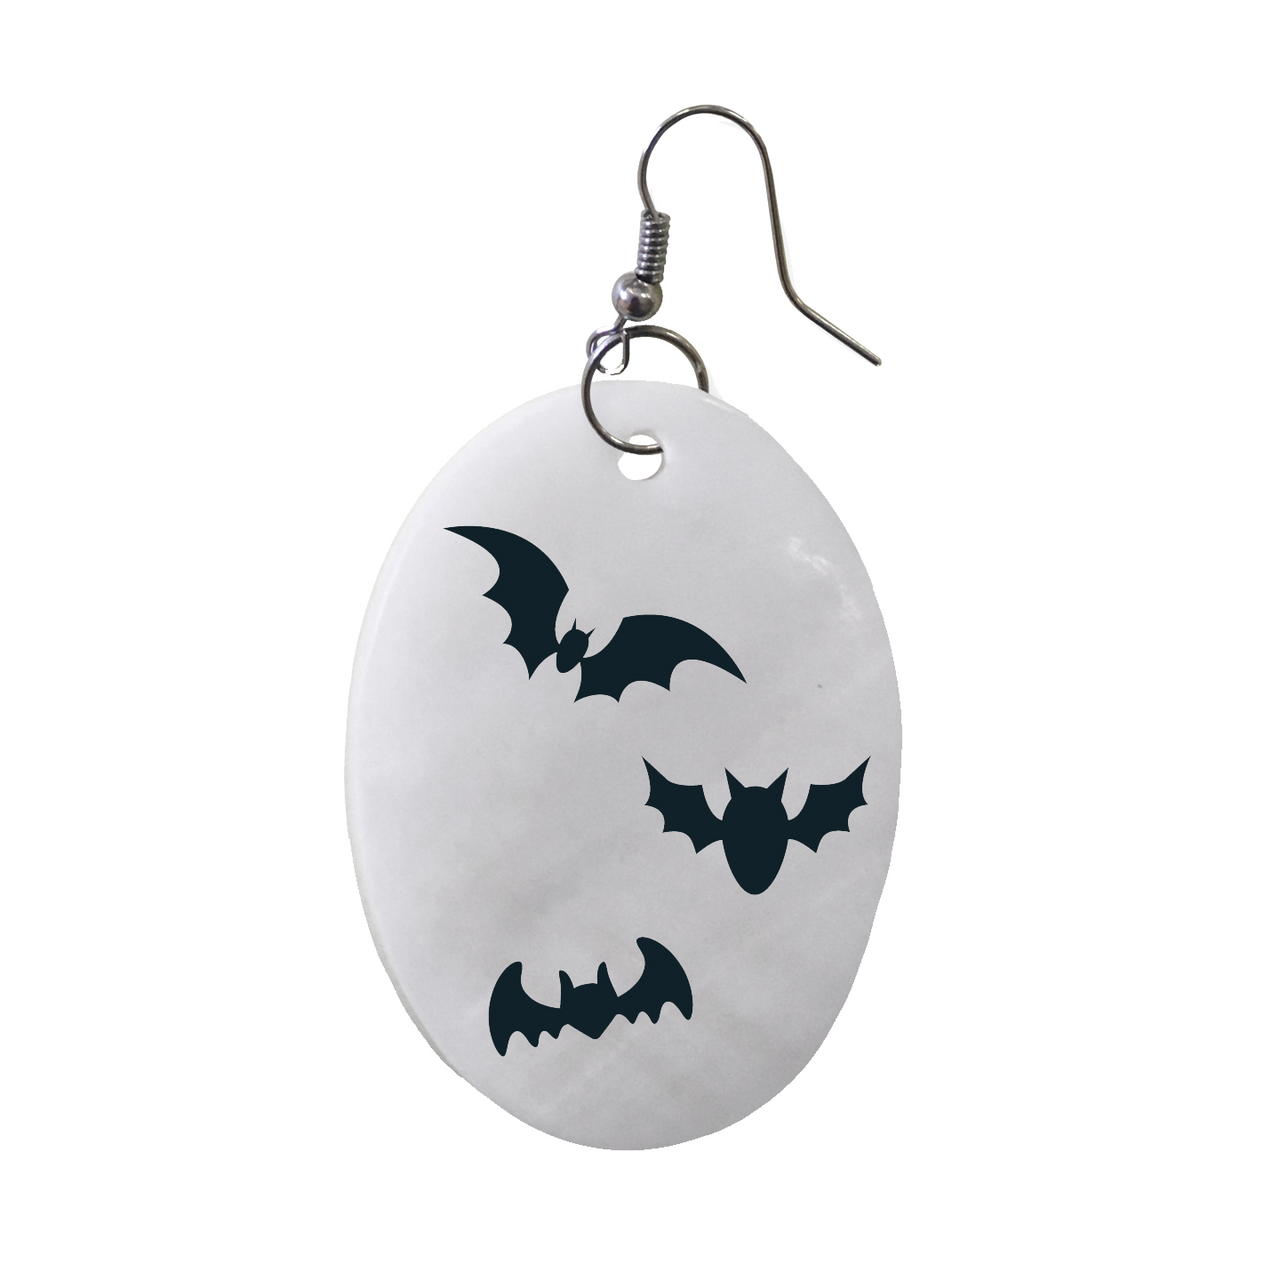 Bat Silhouette Shell Earrings (Oval)- One Pair